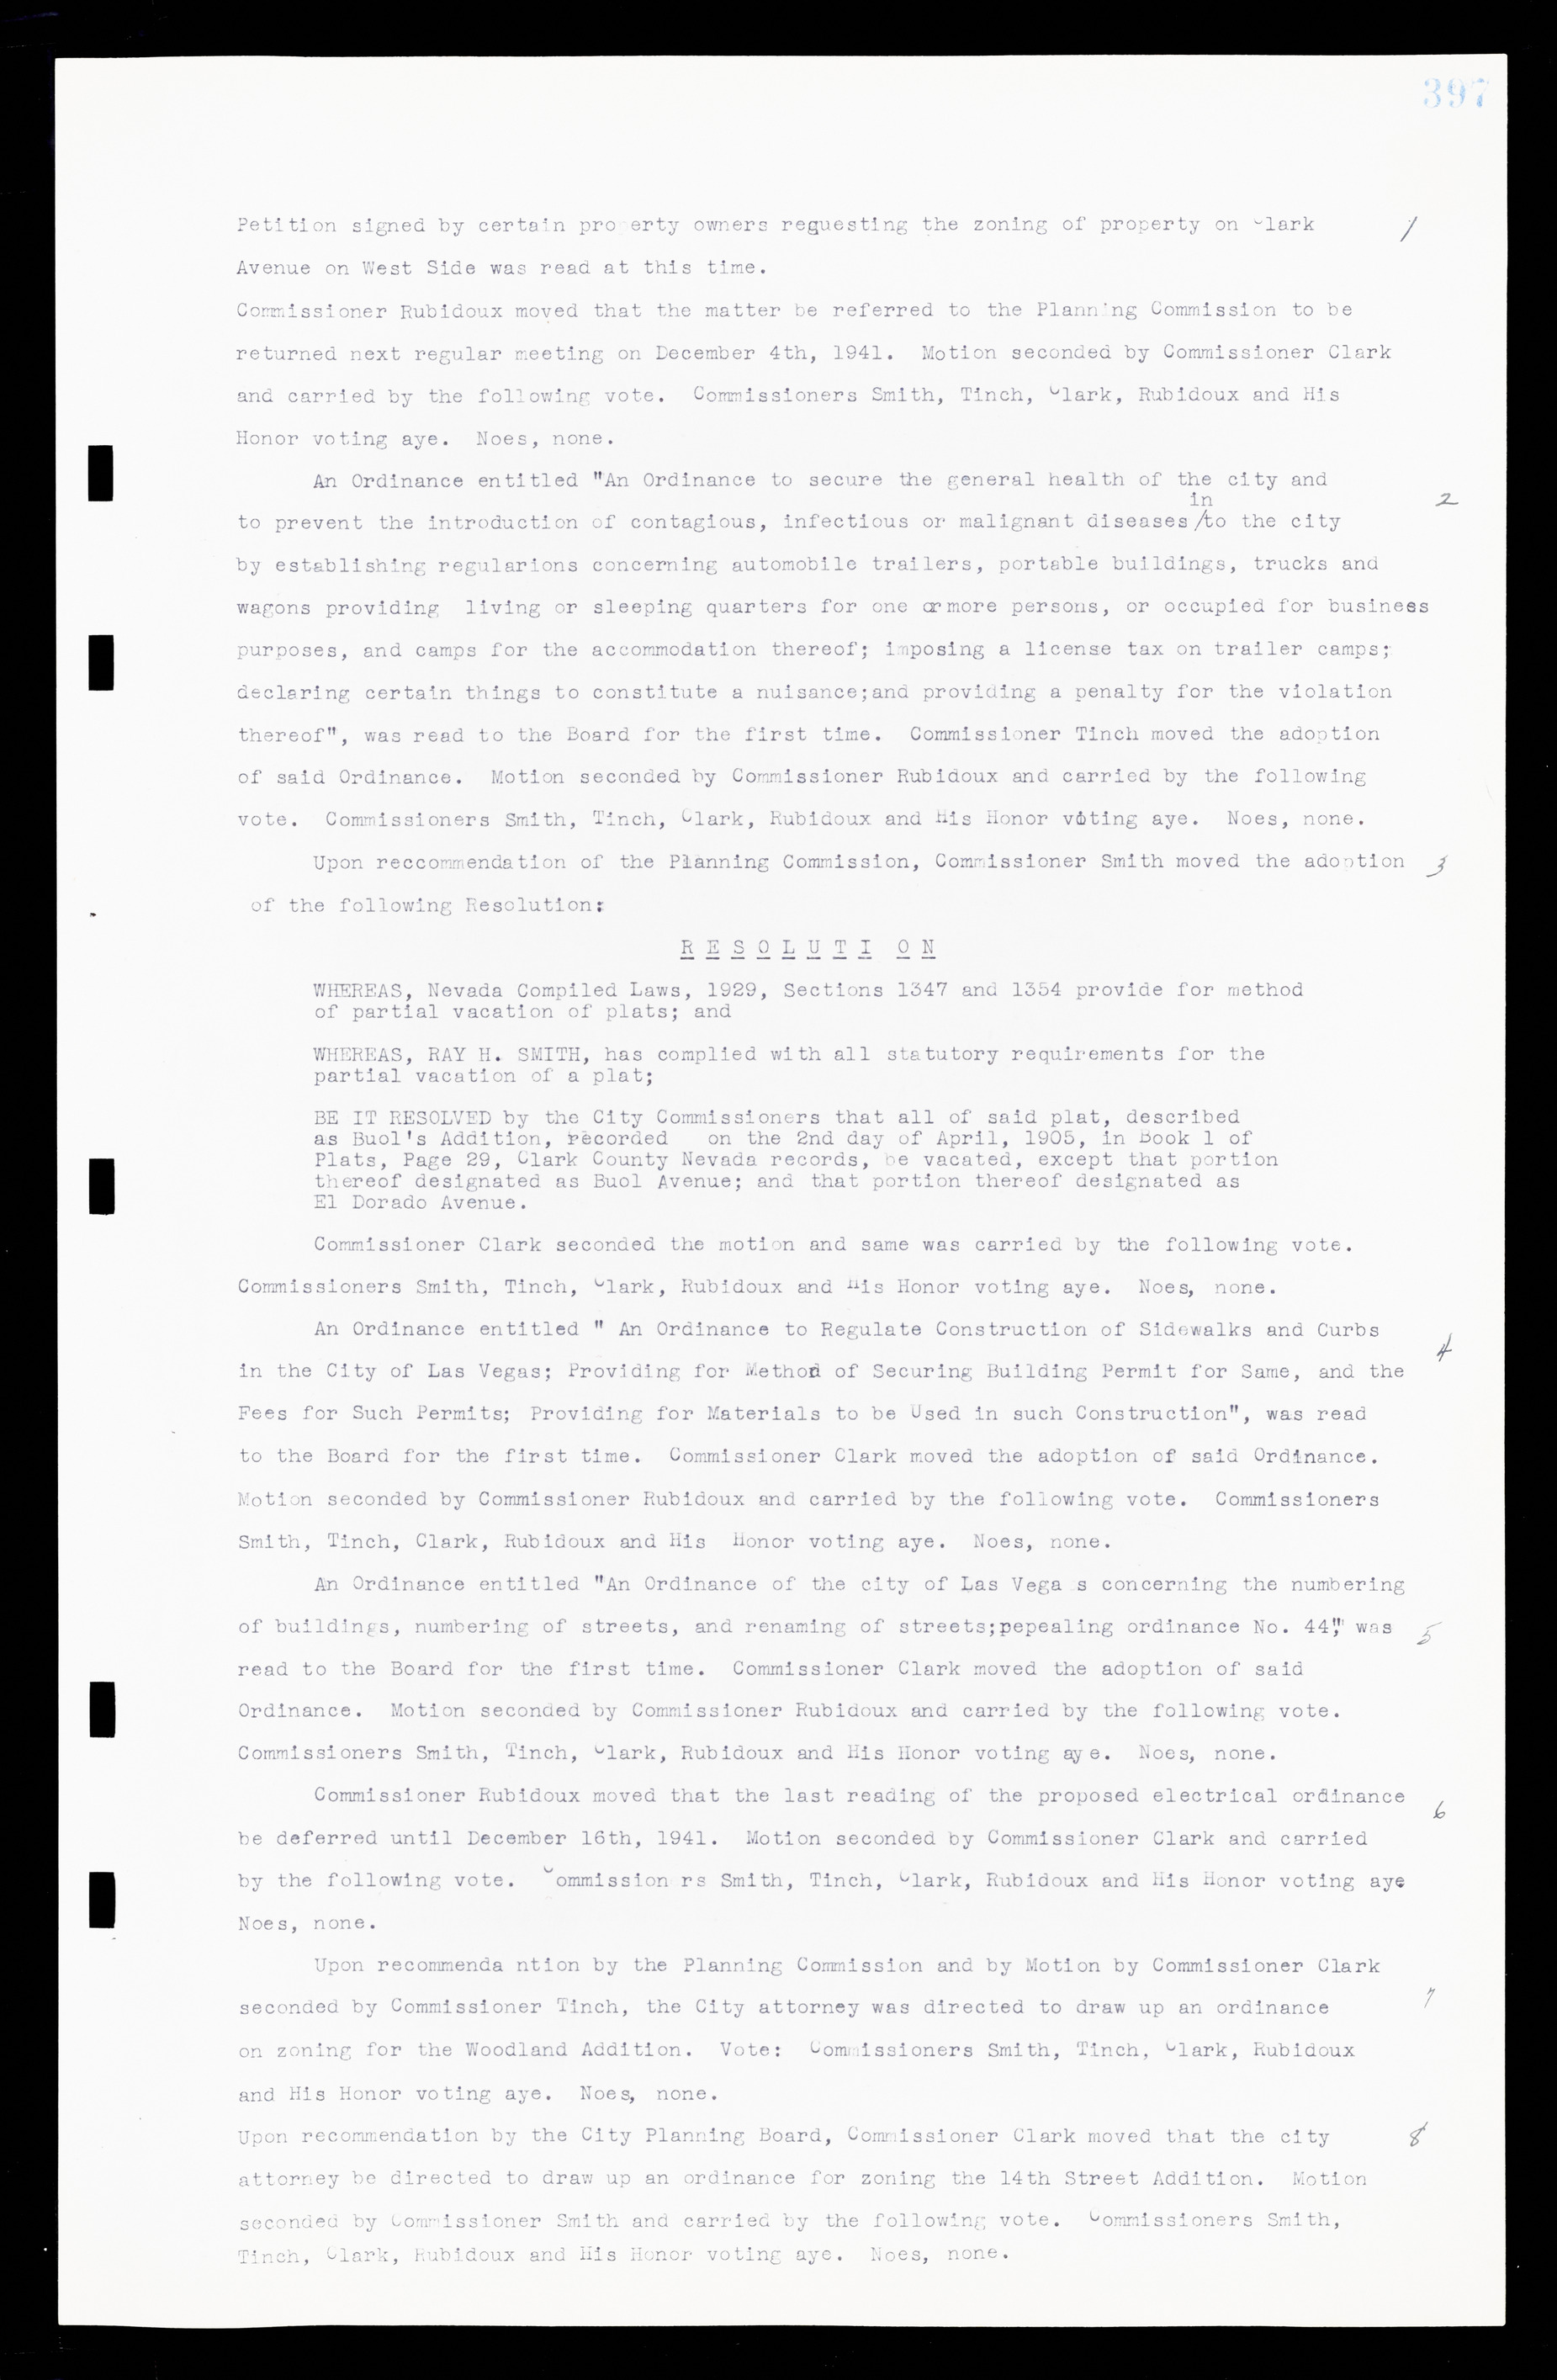 Las Vegas City Commission Minutes, February 17, 1937 to August 4, 1942, lvc000004-423